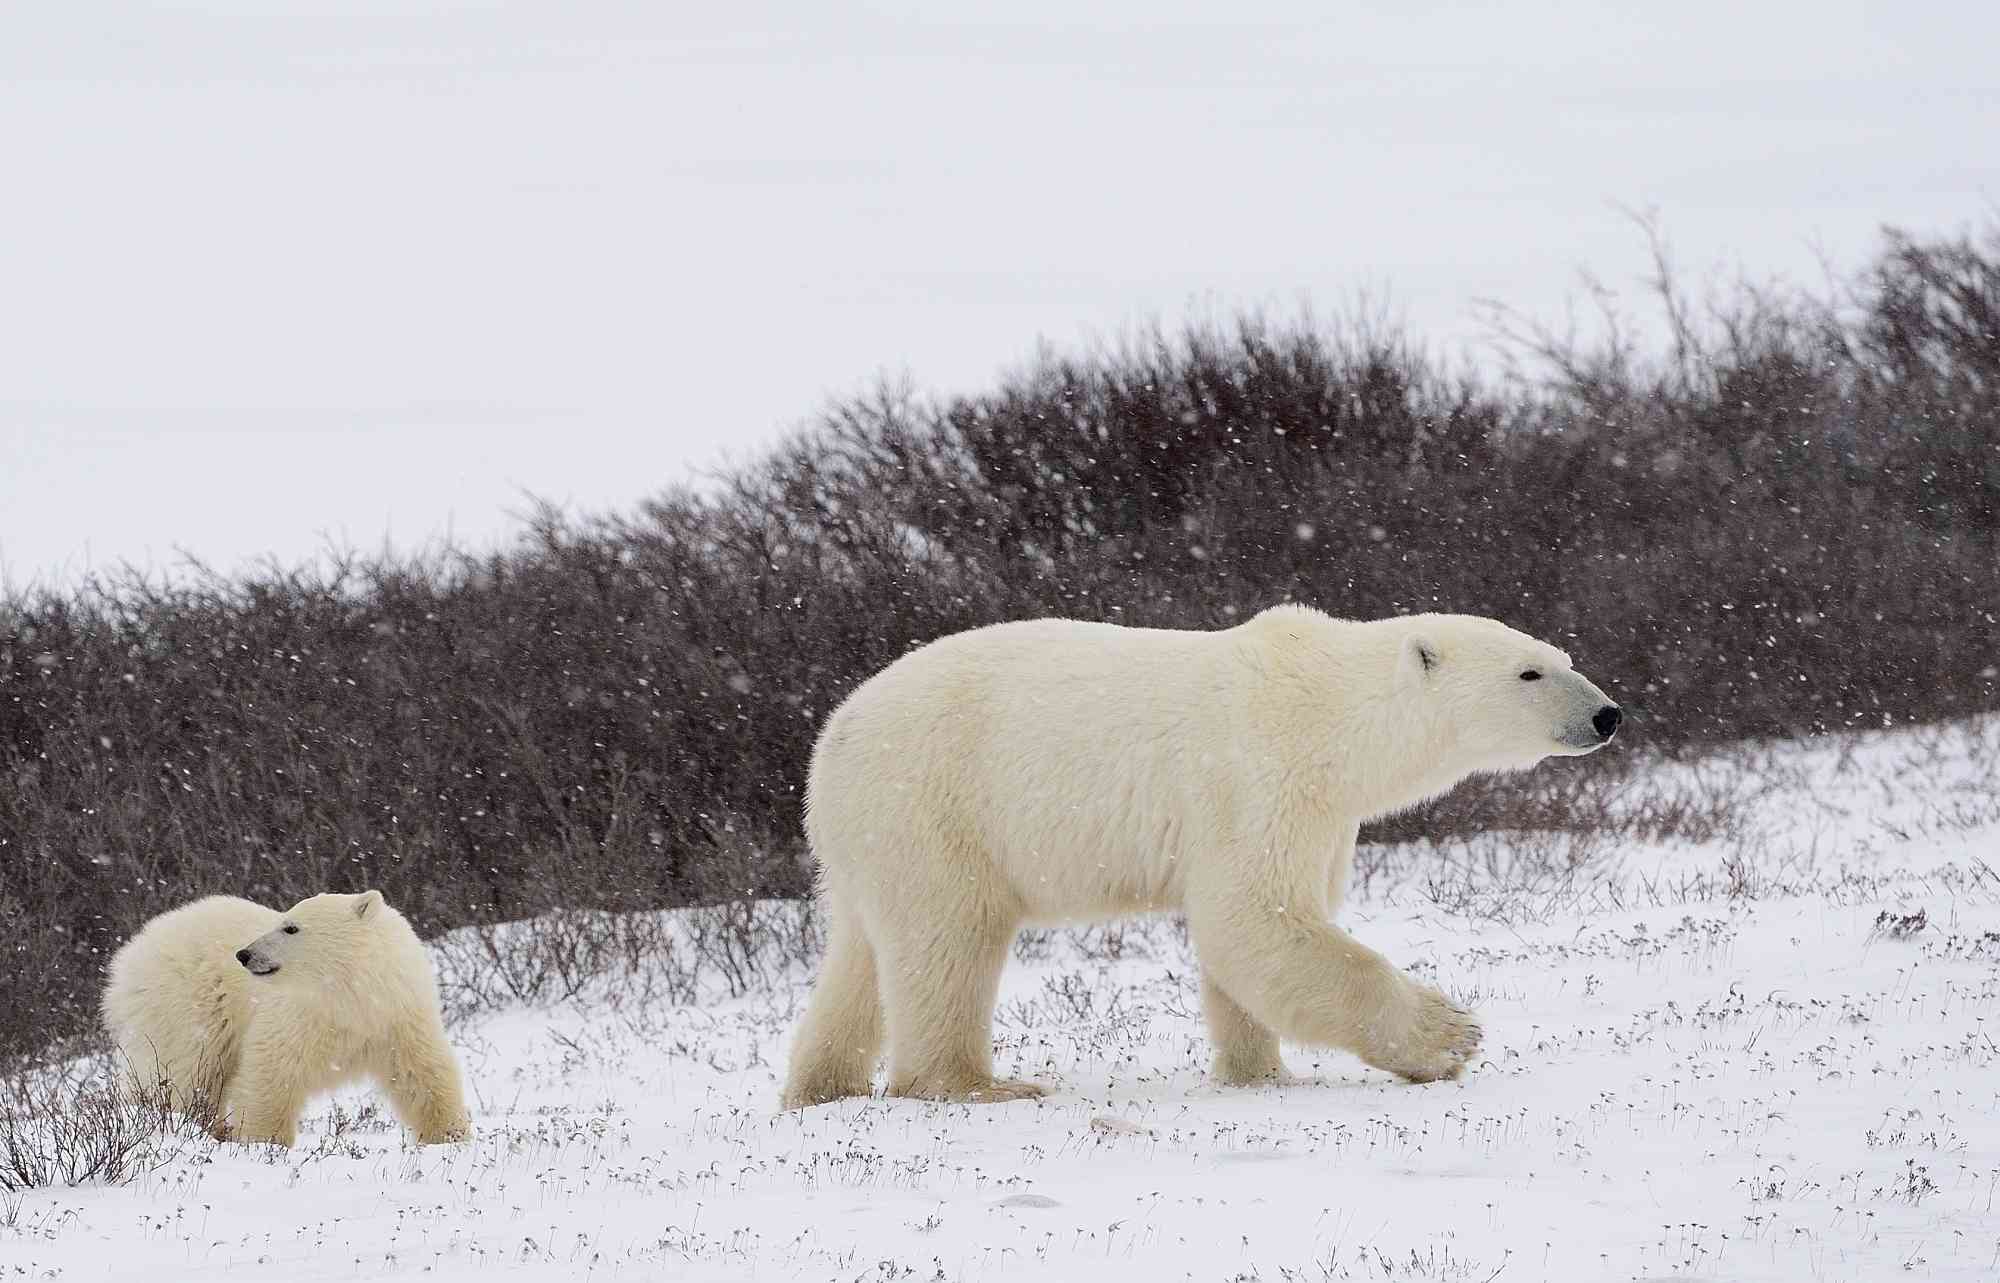 polar bears in the tundra biome